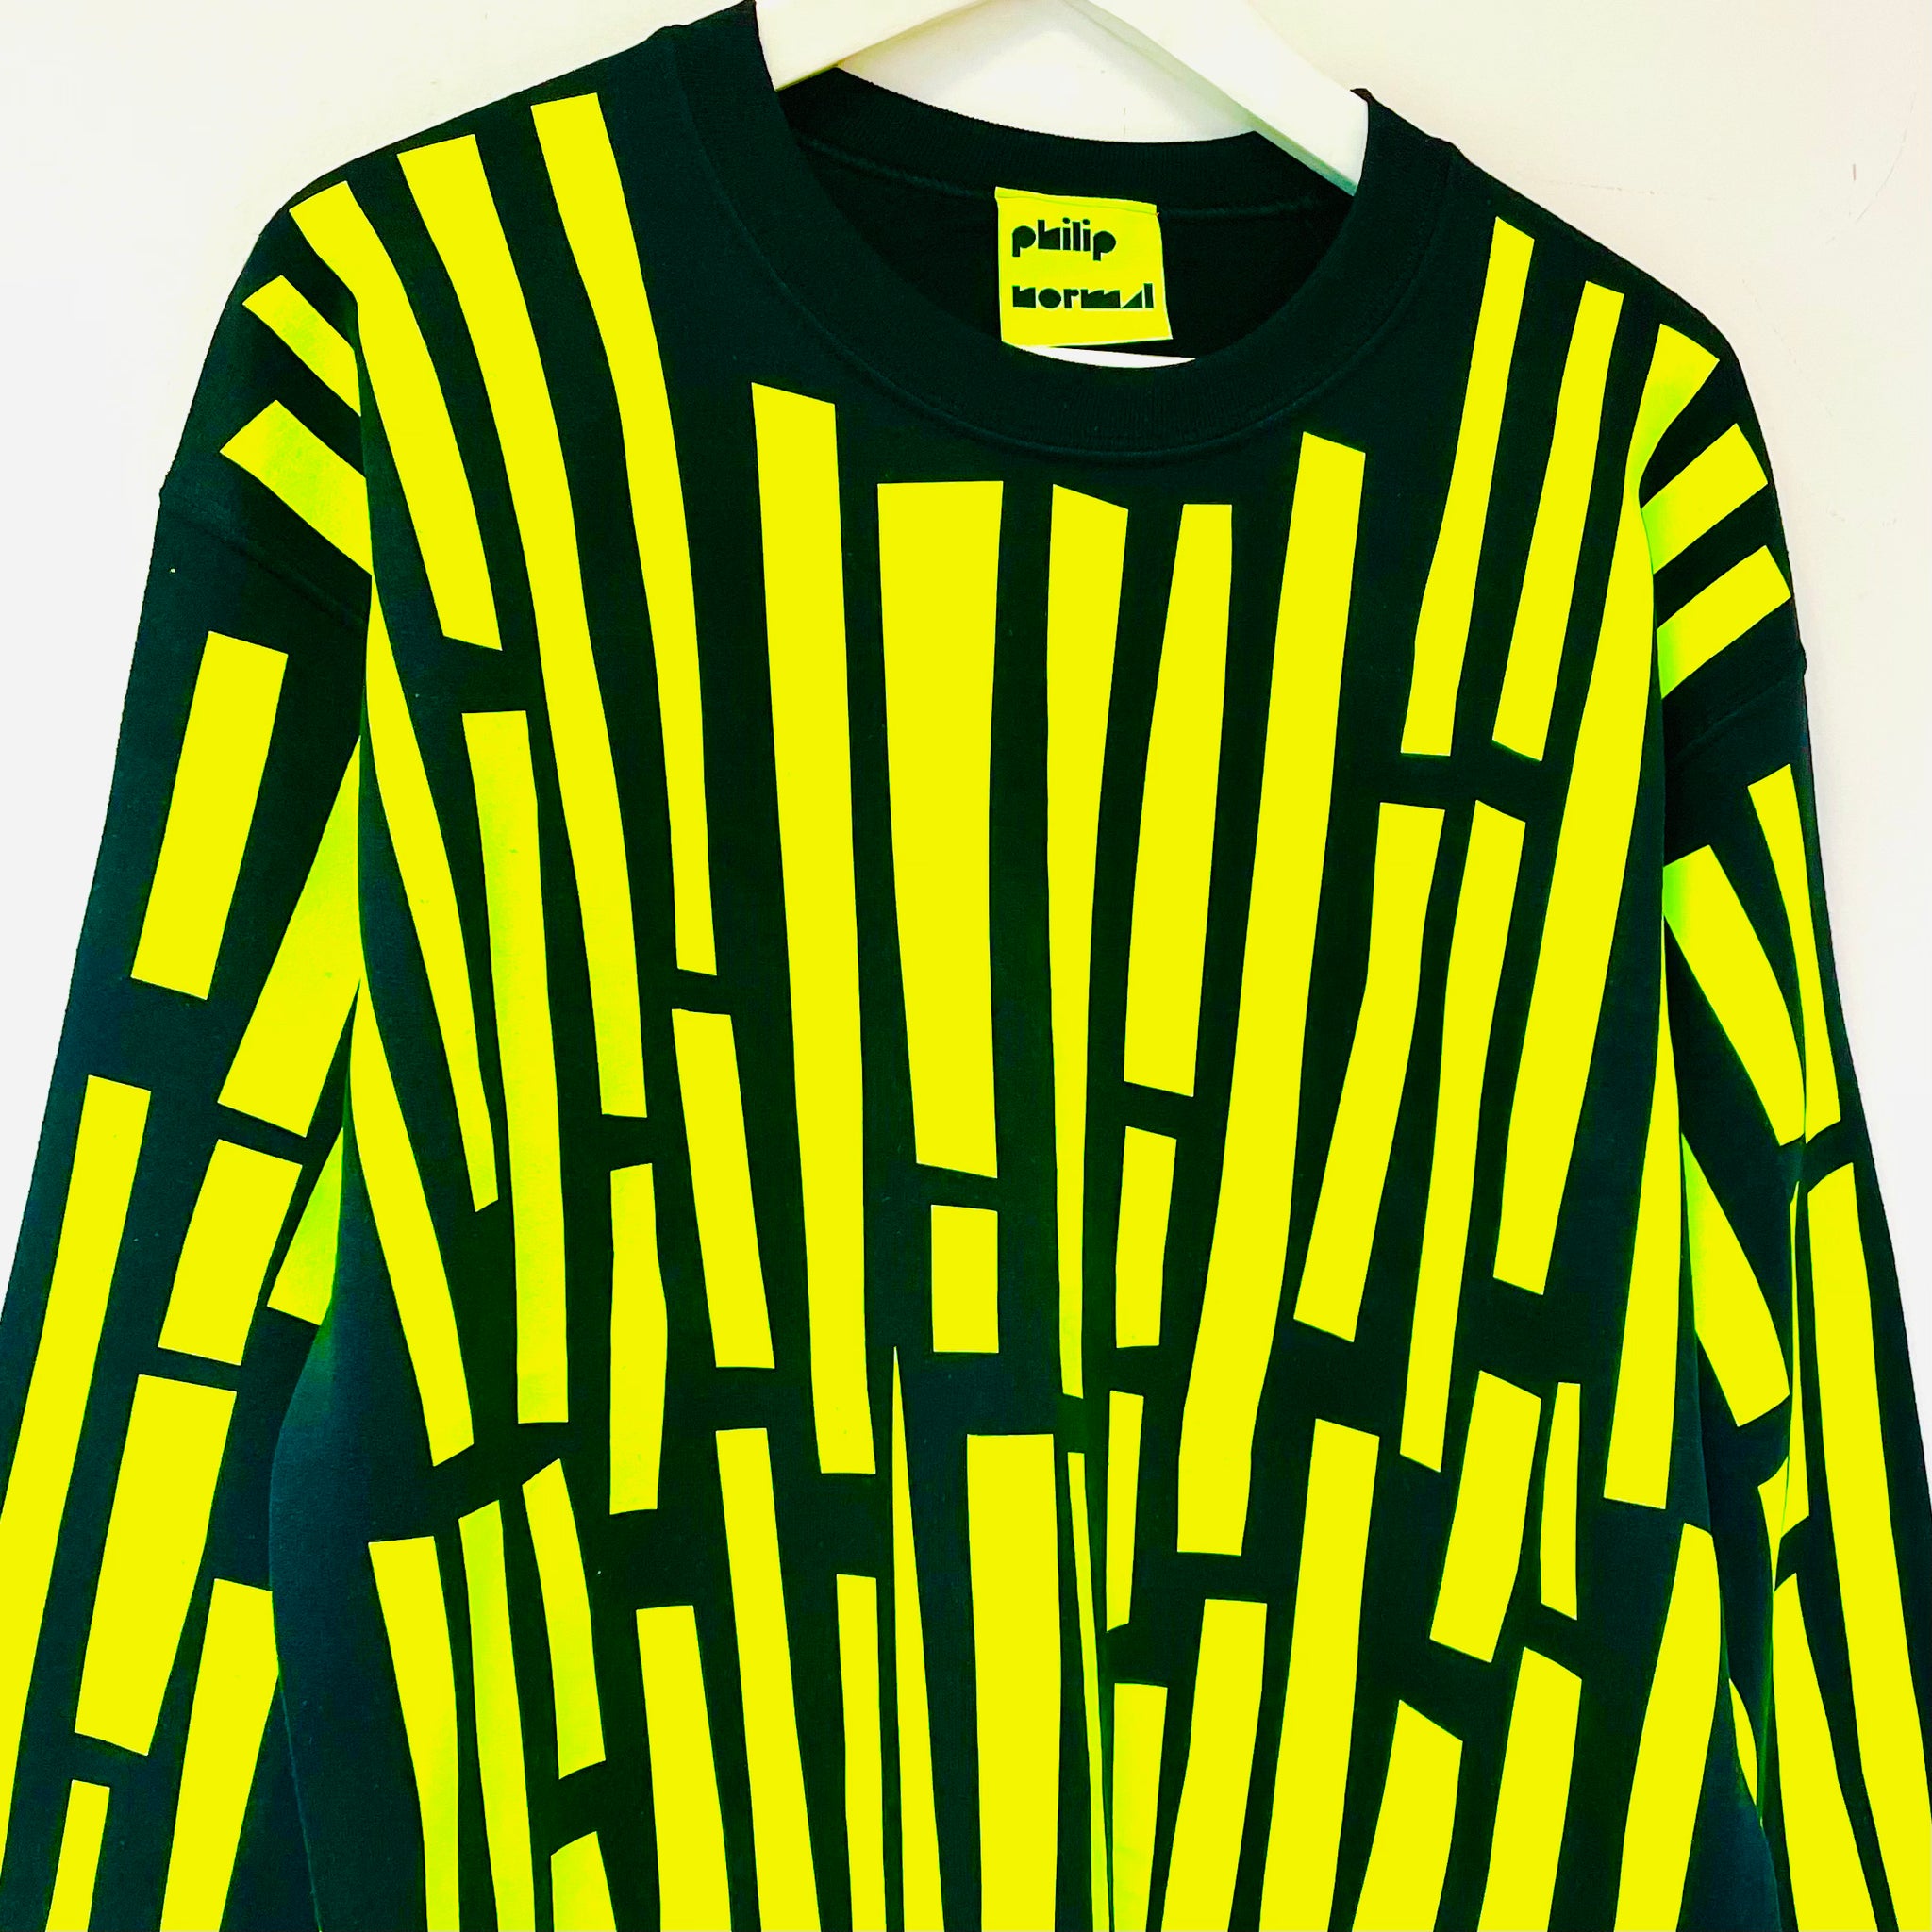 Neon Yellow Off-cuts Sweatshirt - Black